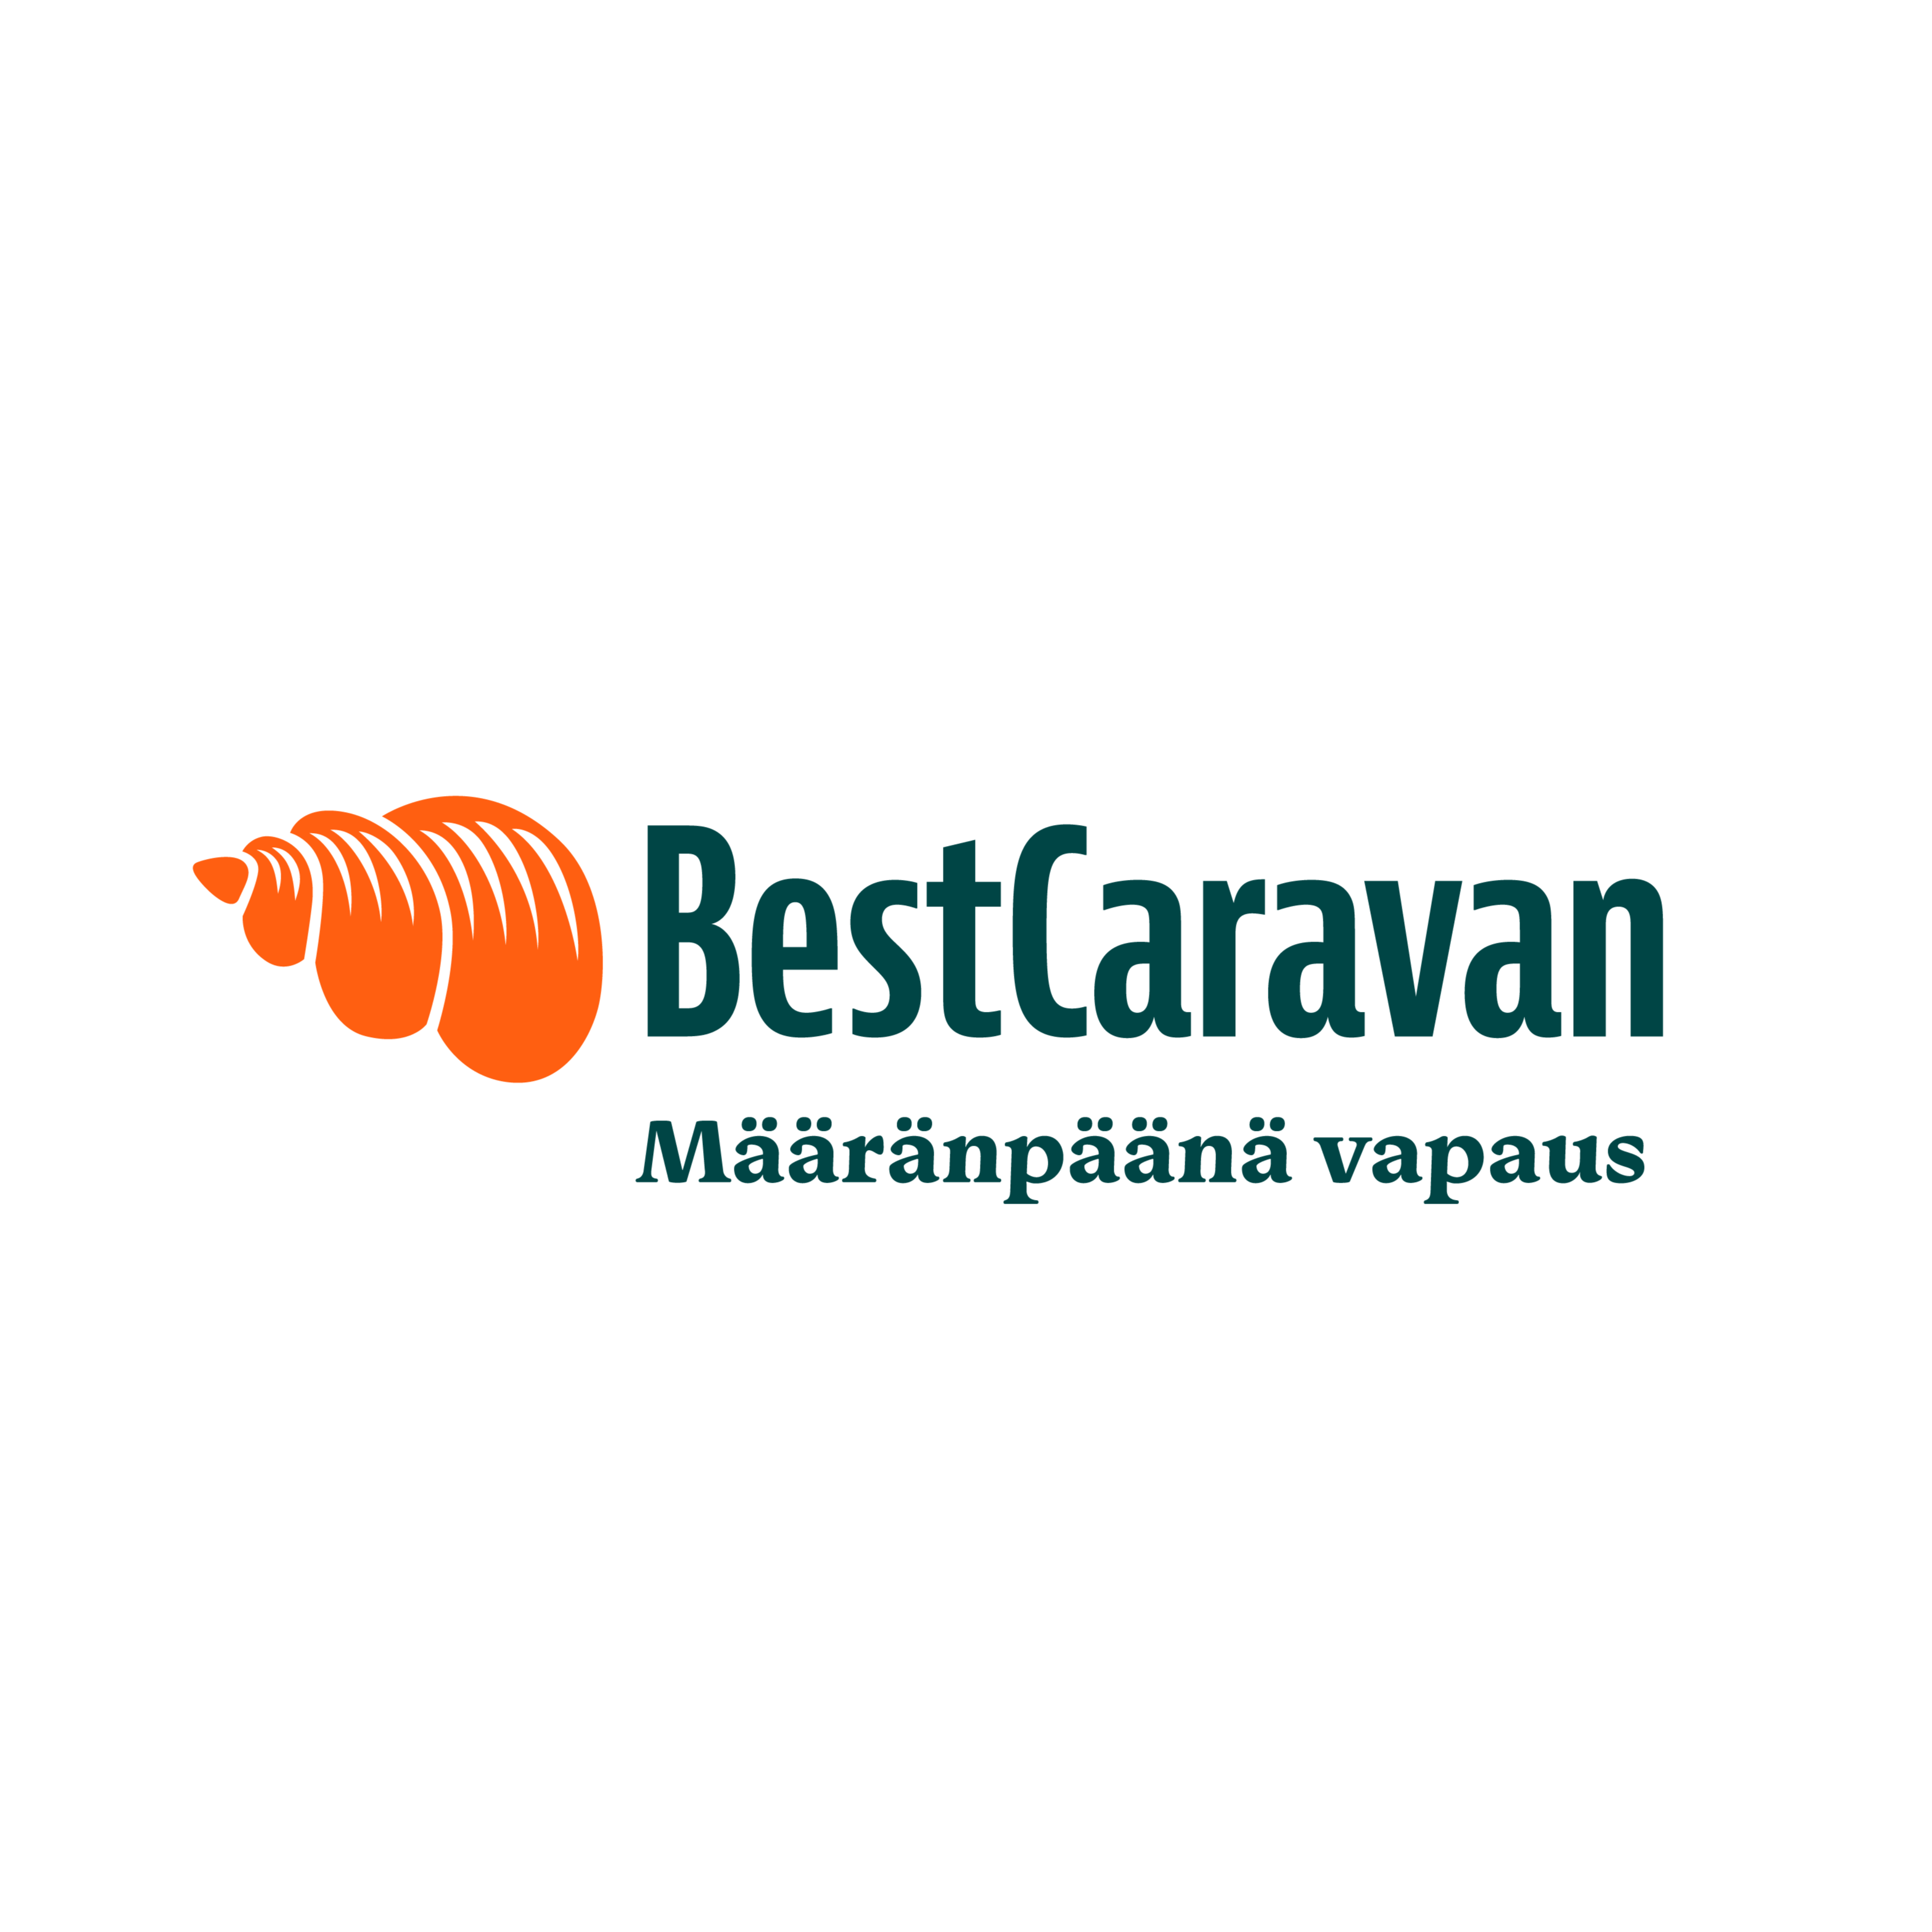 Best Caravan Seinäjoki Logo